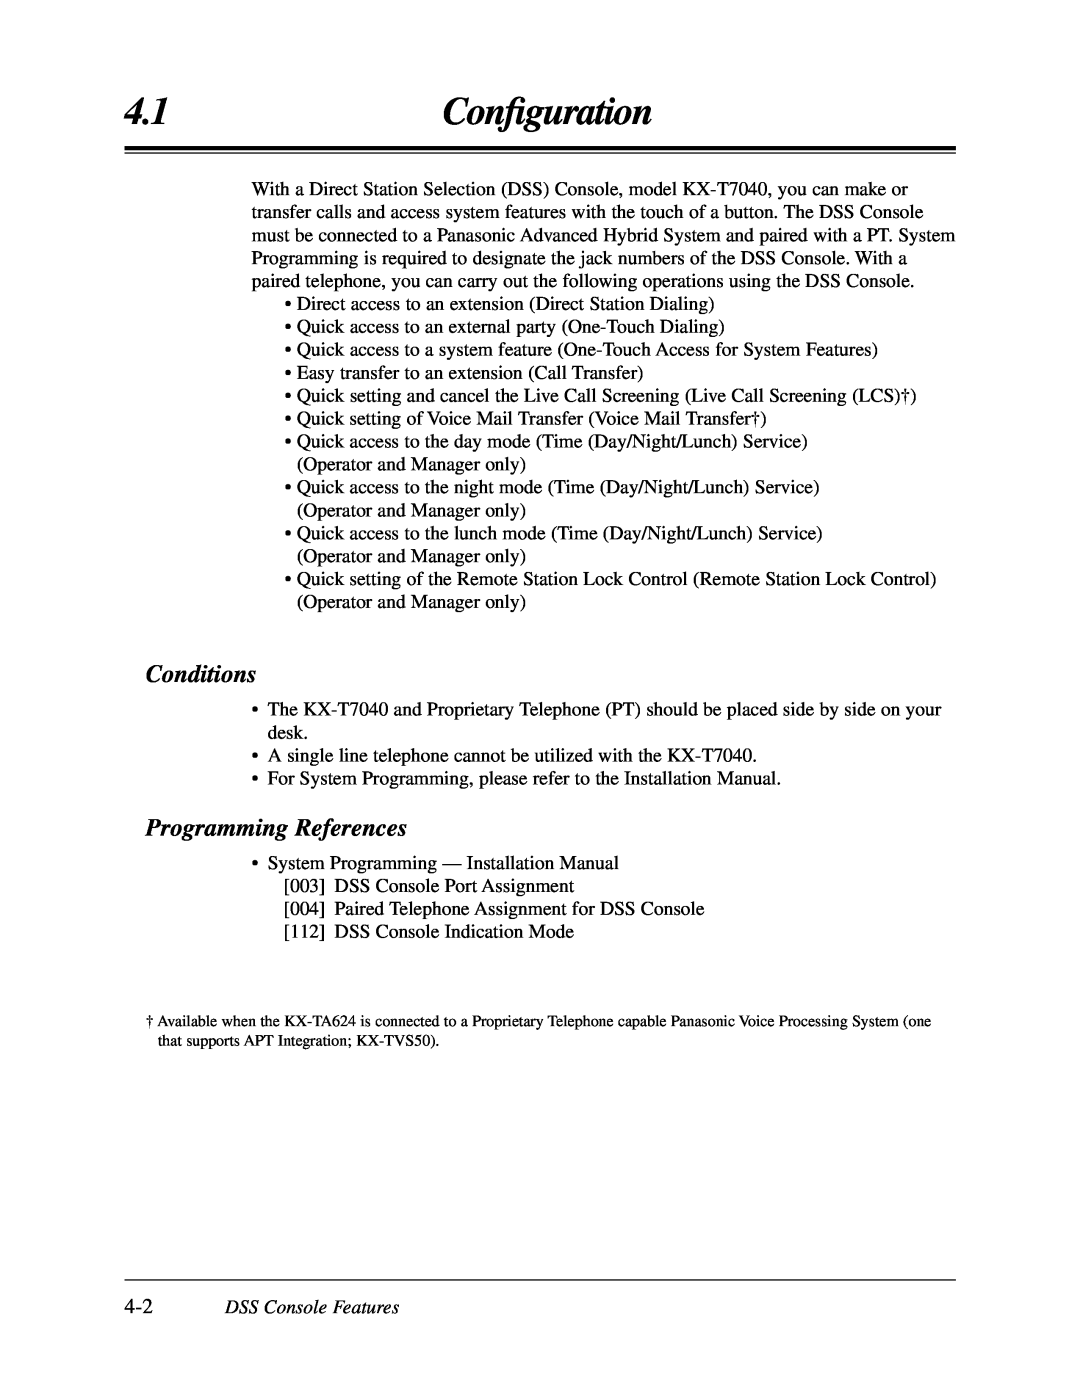 Panasonic KX-TA624 user manual 4.1Conﬁguration, Conditions, Programming References 